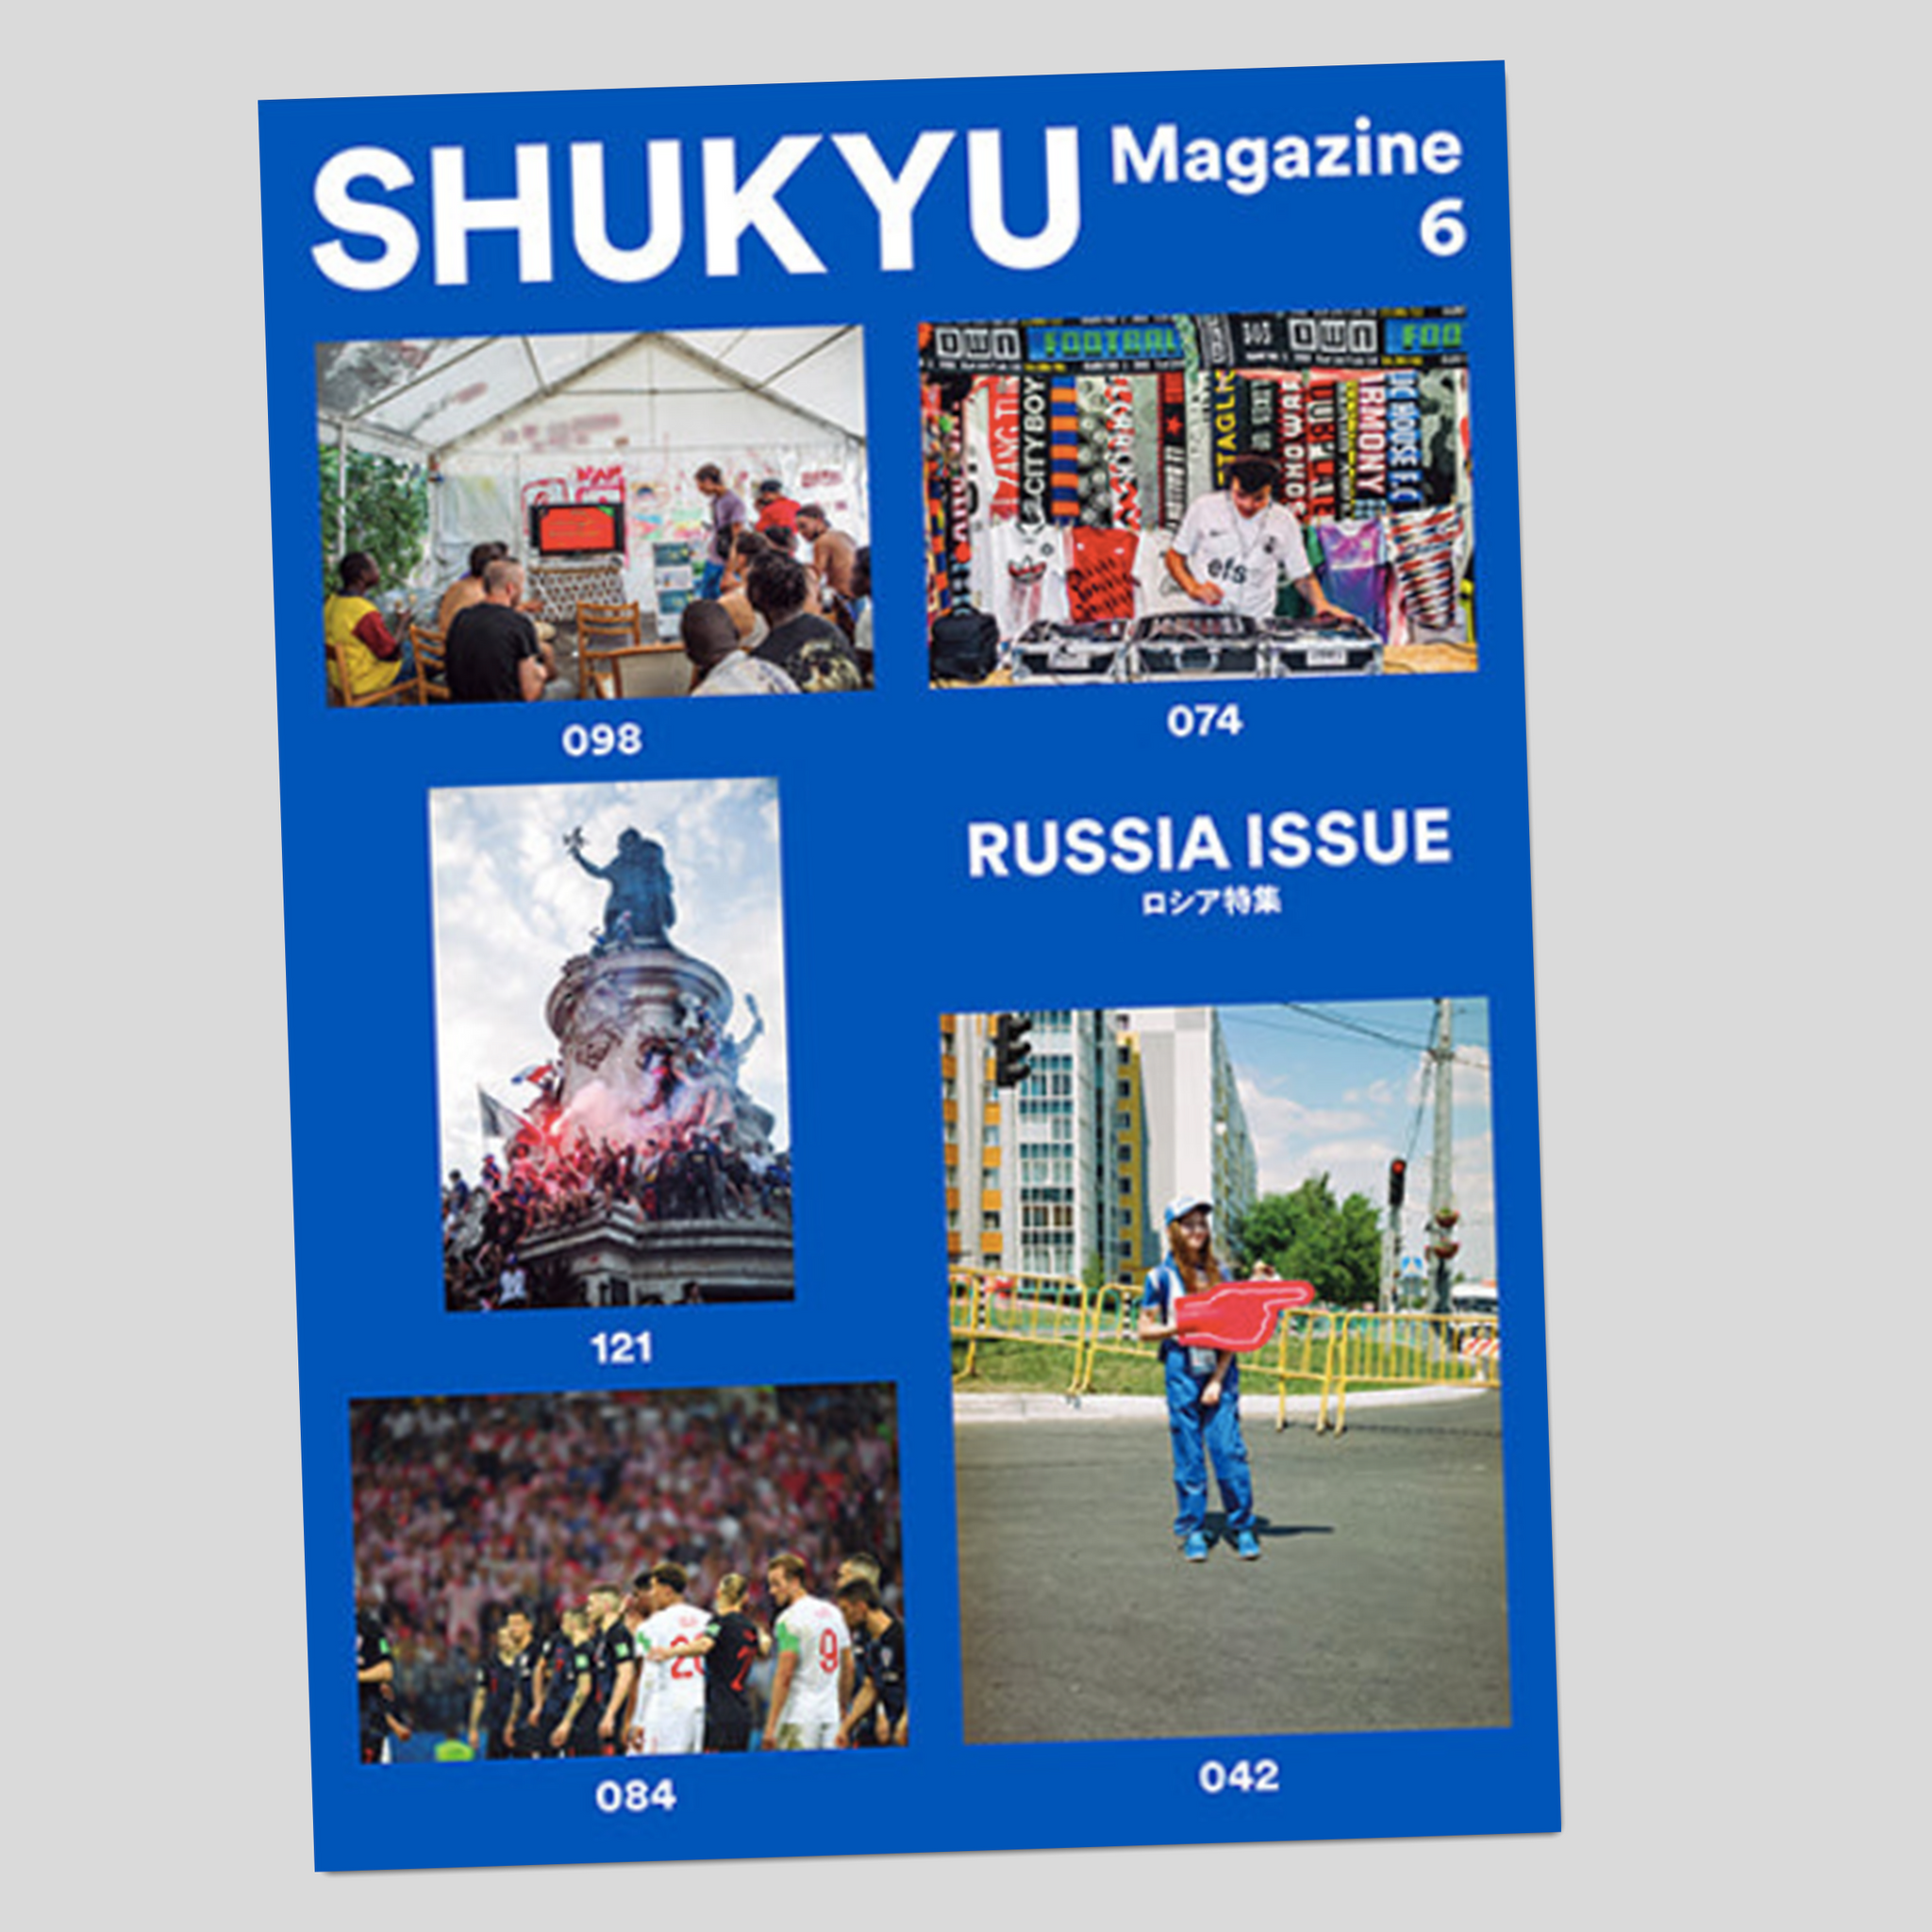 Shukyu Magazine #6